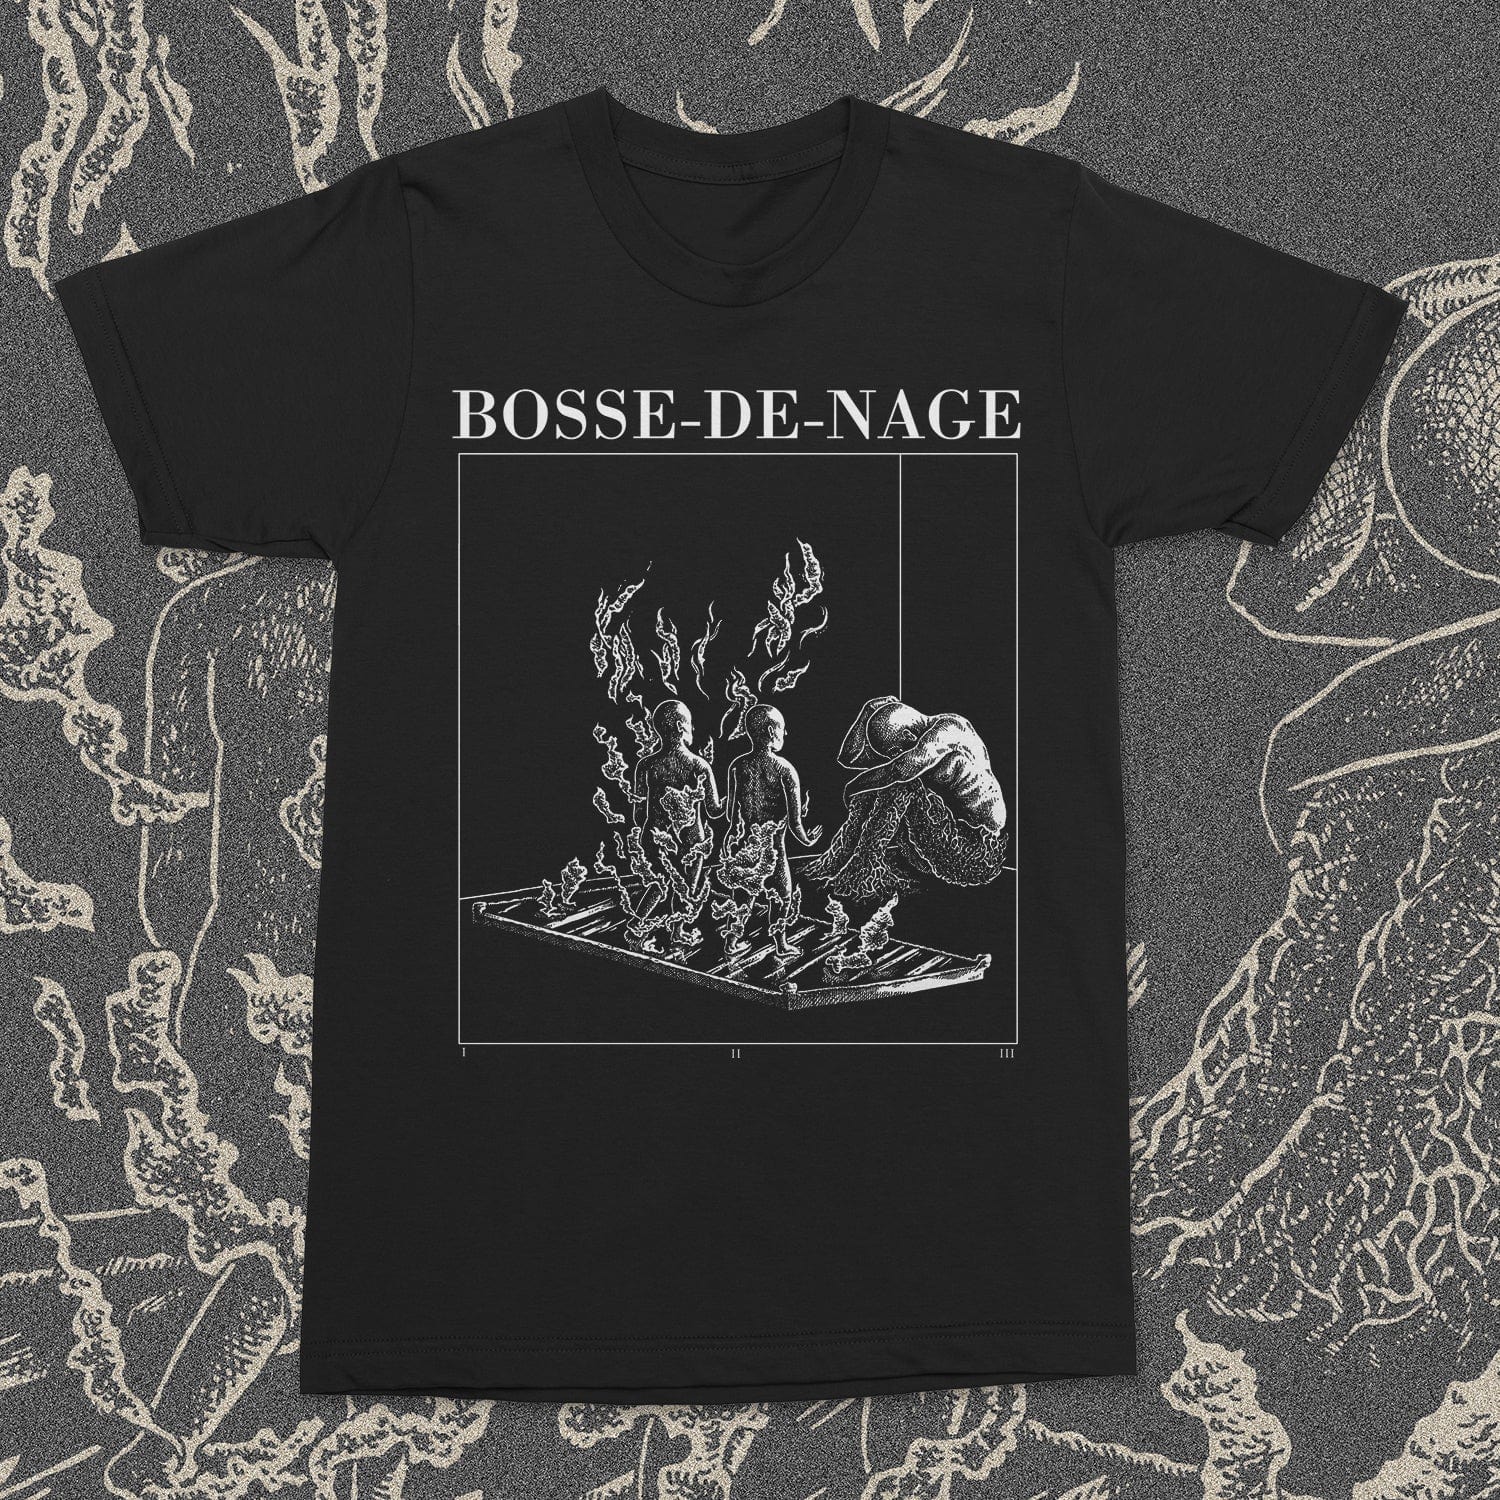 The Flenser Apparel Bosse-de-Nage "God Ennui" Shirt